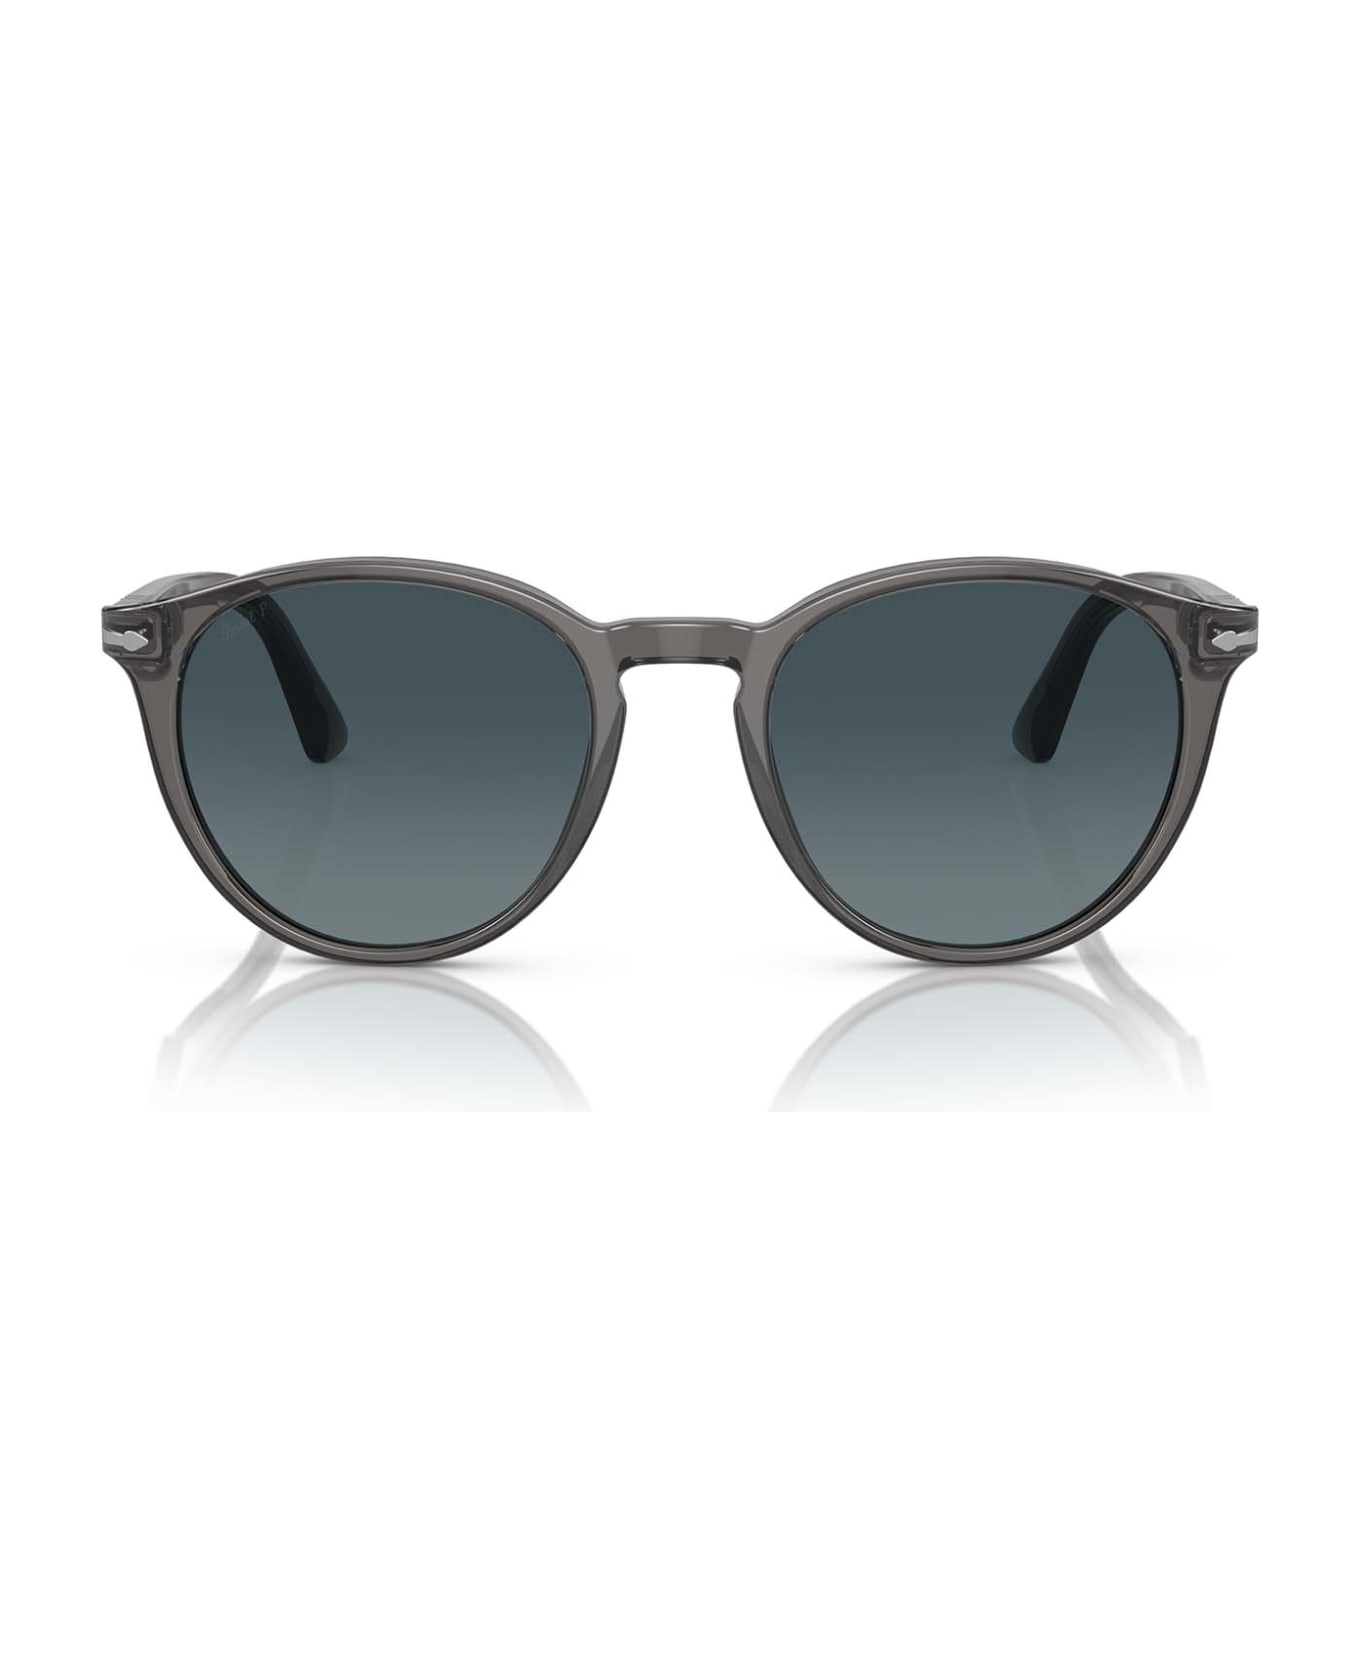 Persol Po3152s Transparent Grey Sunglasses - Transparent Grey